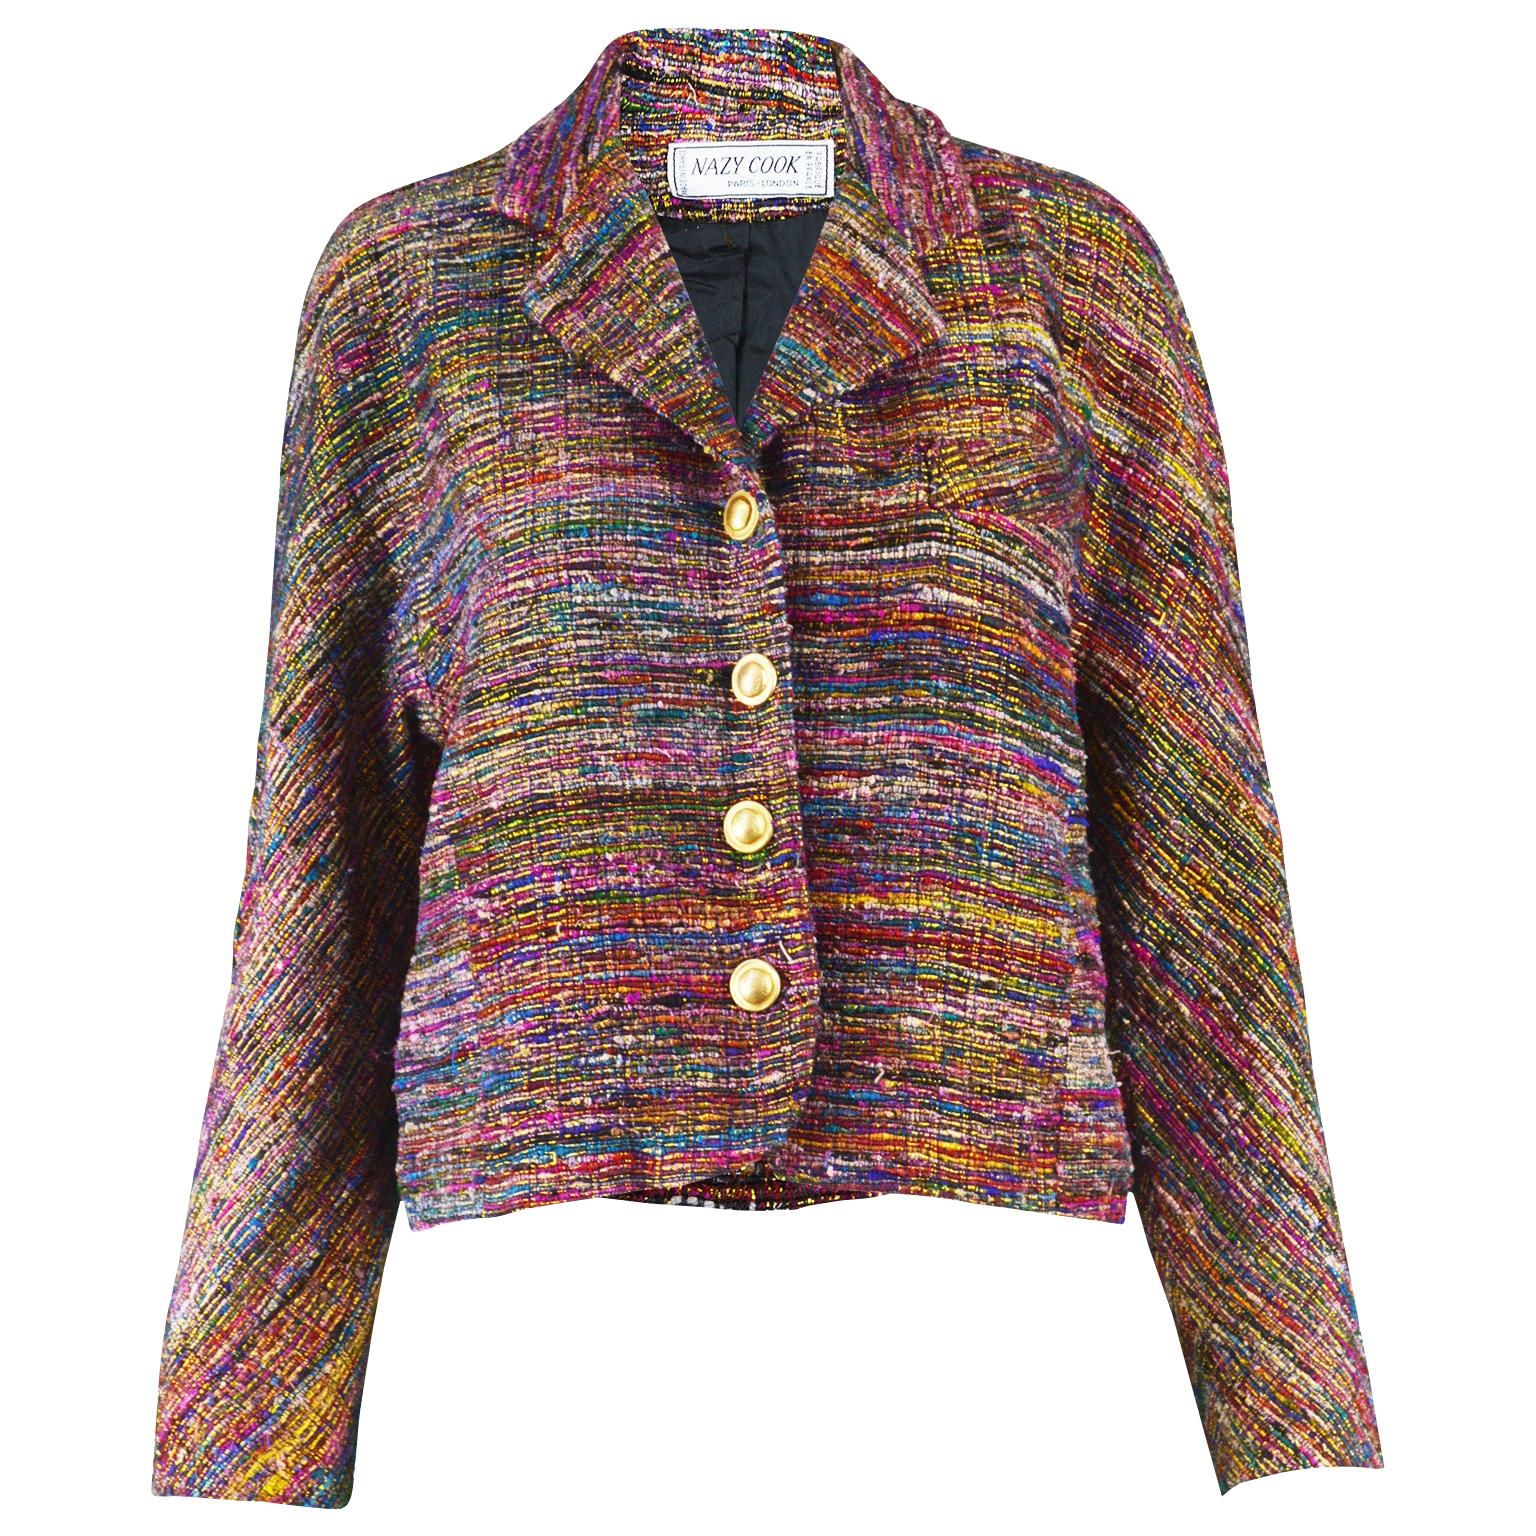 Nazy Cook Paris Vintage 1980's Silk & Lurex Woven Tweed Boucle Blazer Jacket